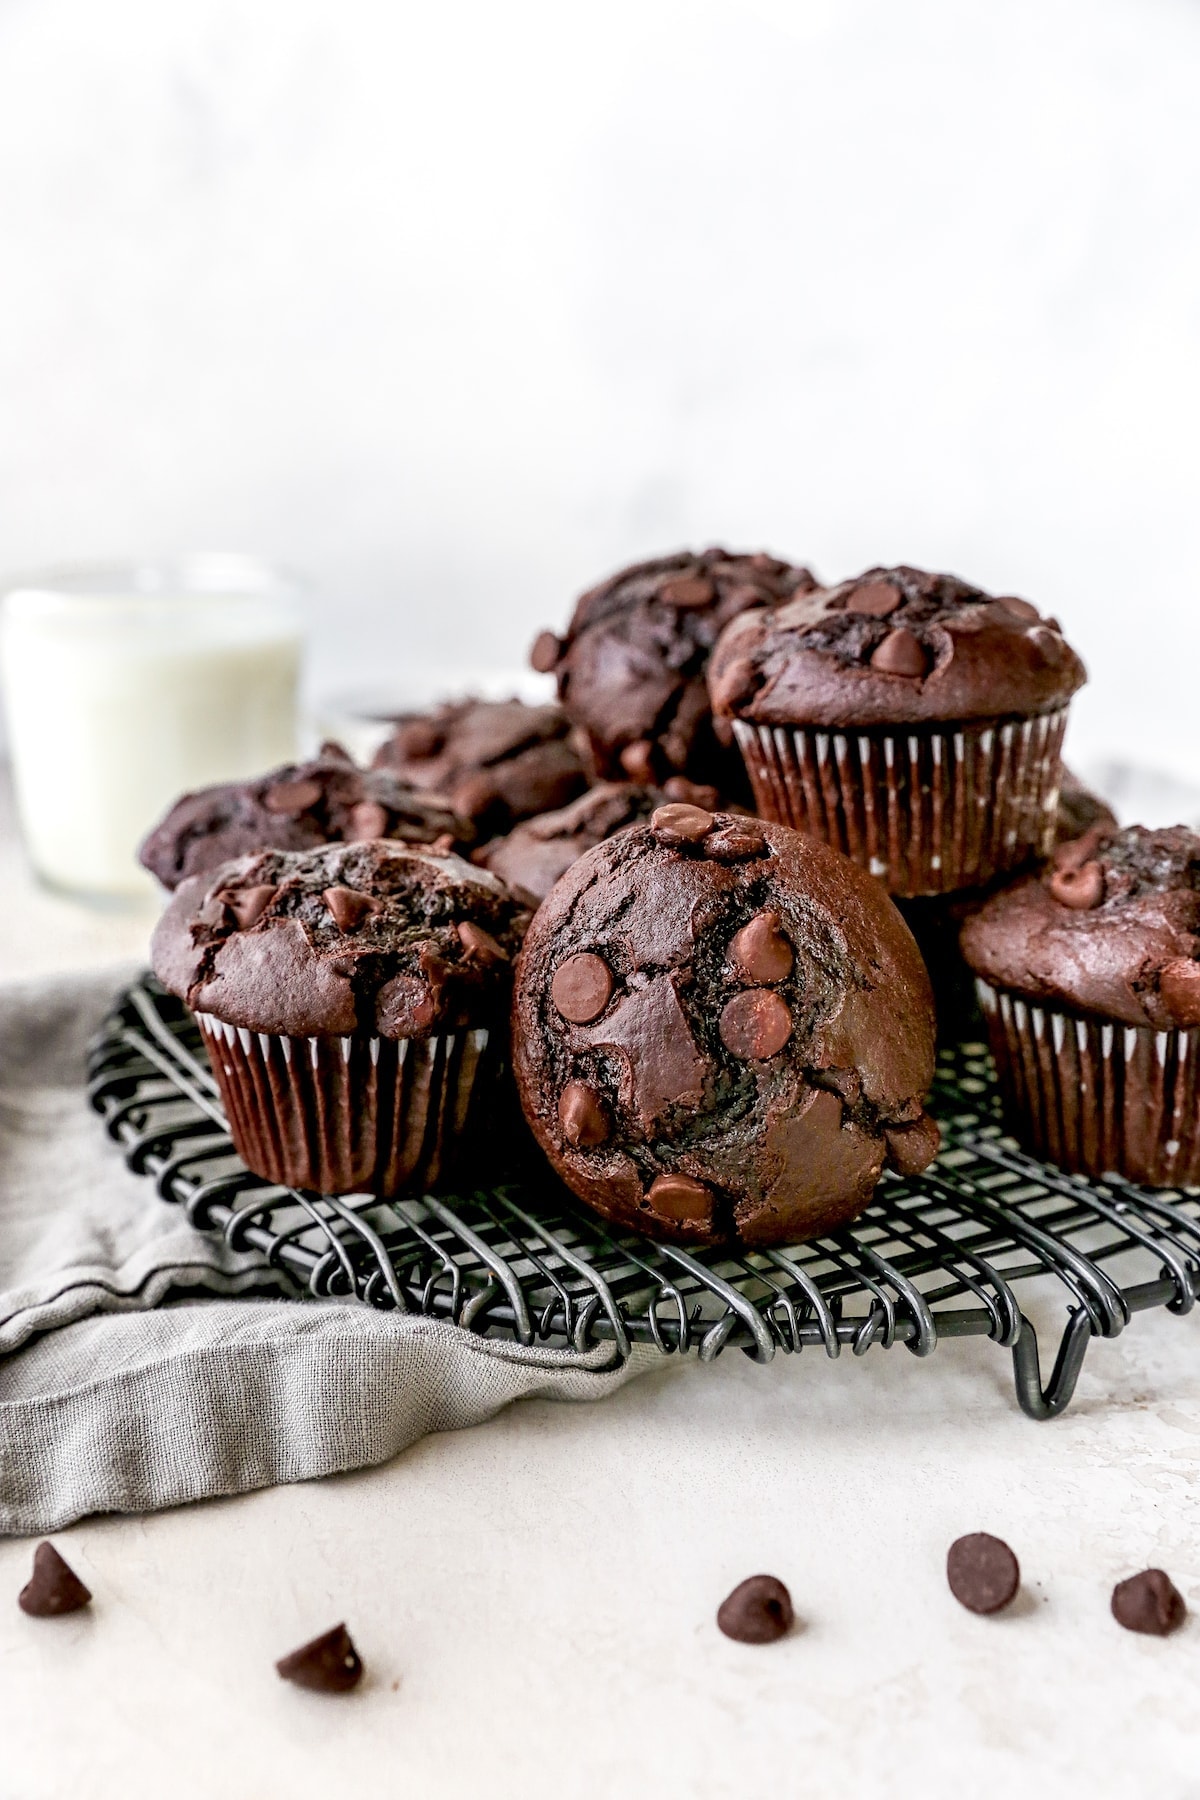 https://www.twopeasandtheirpod.com/wp-content/uploads/2020/04/chocolate-muffins-3.jpg